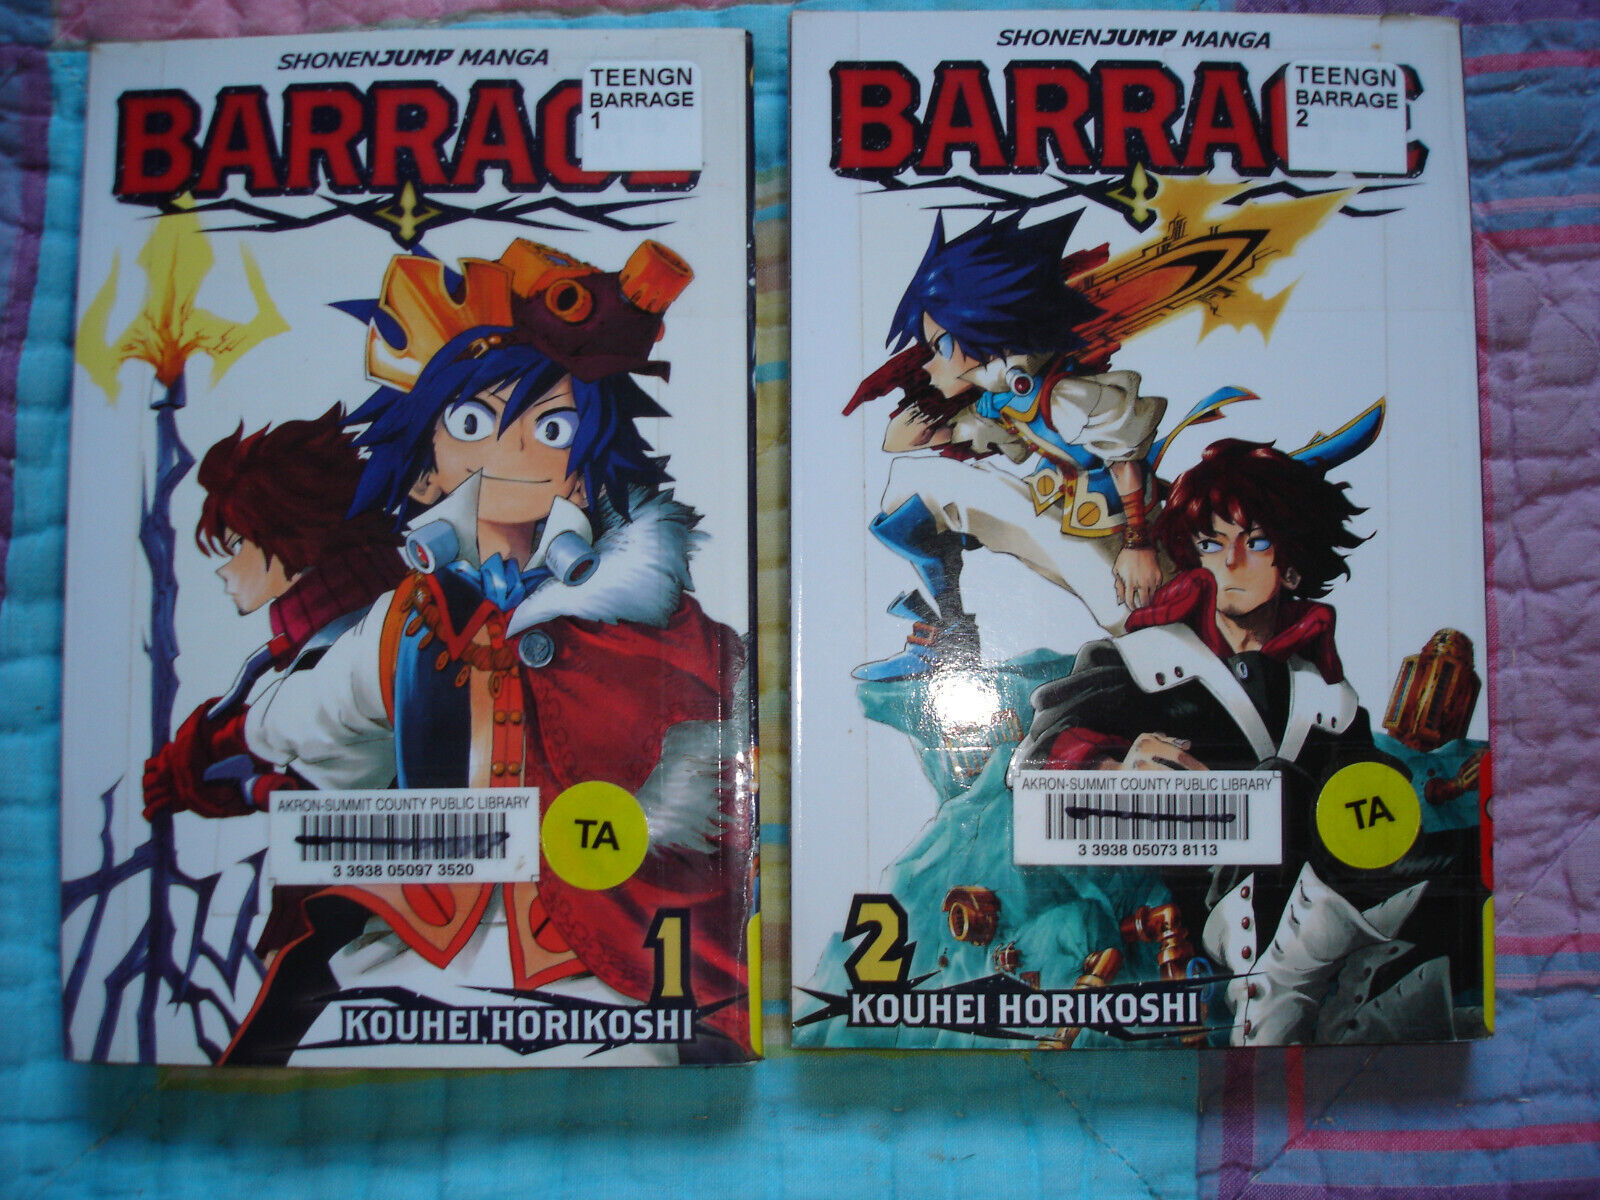 Barrage Manga Lot Volume 1 and 2 by Kohei Horikoshi - Complete 2 Volume Series